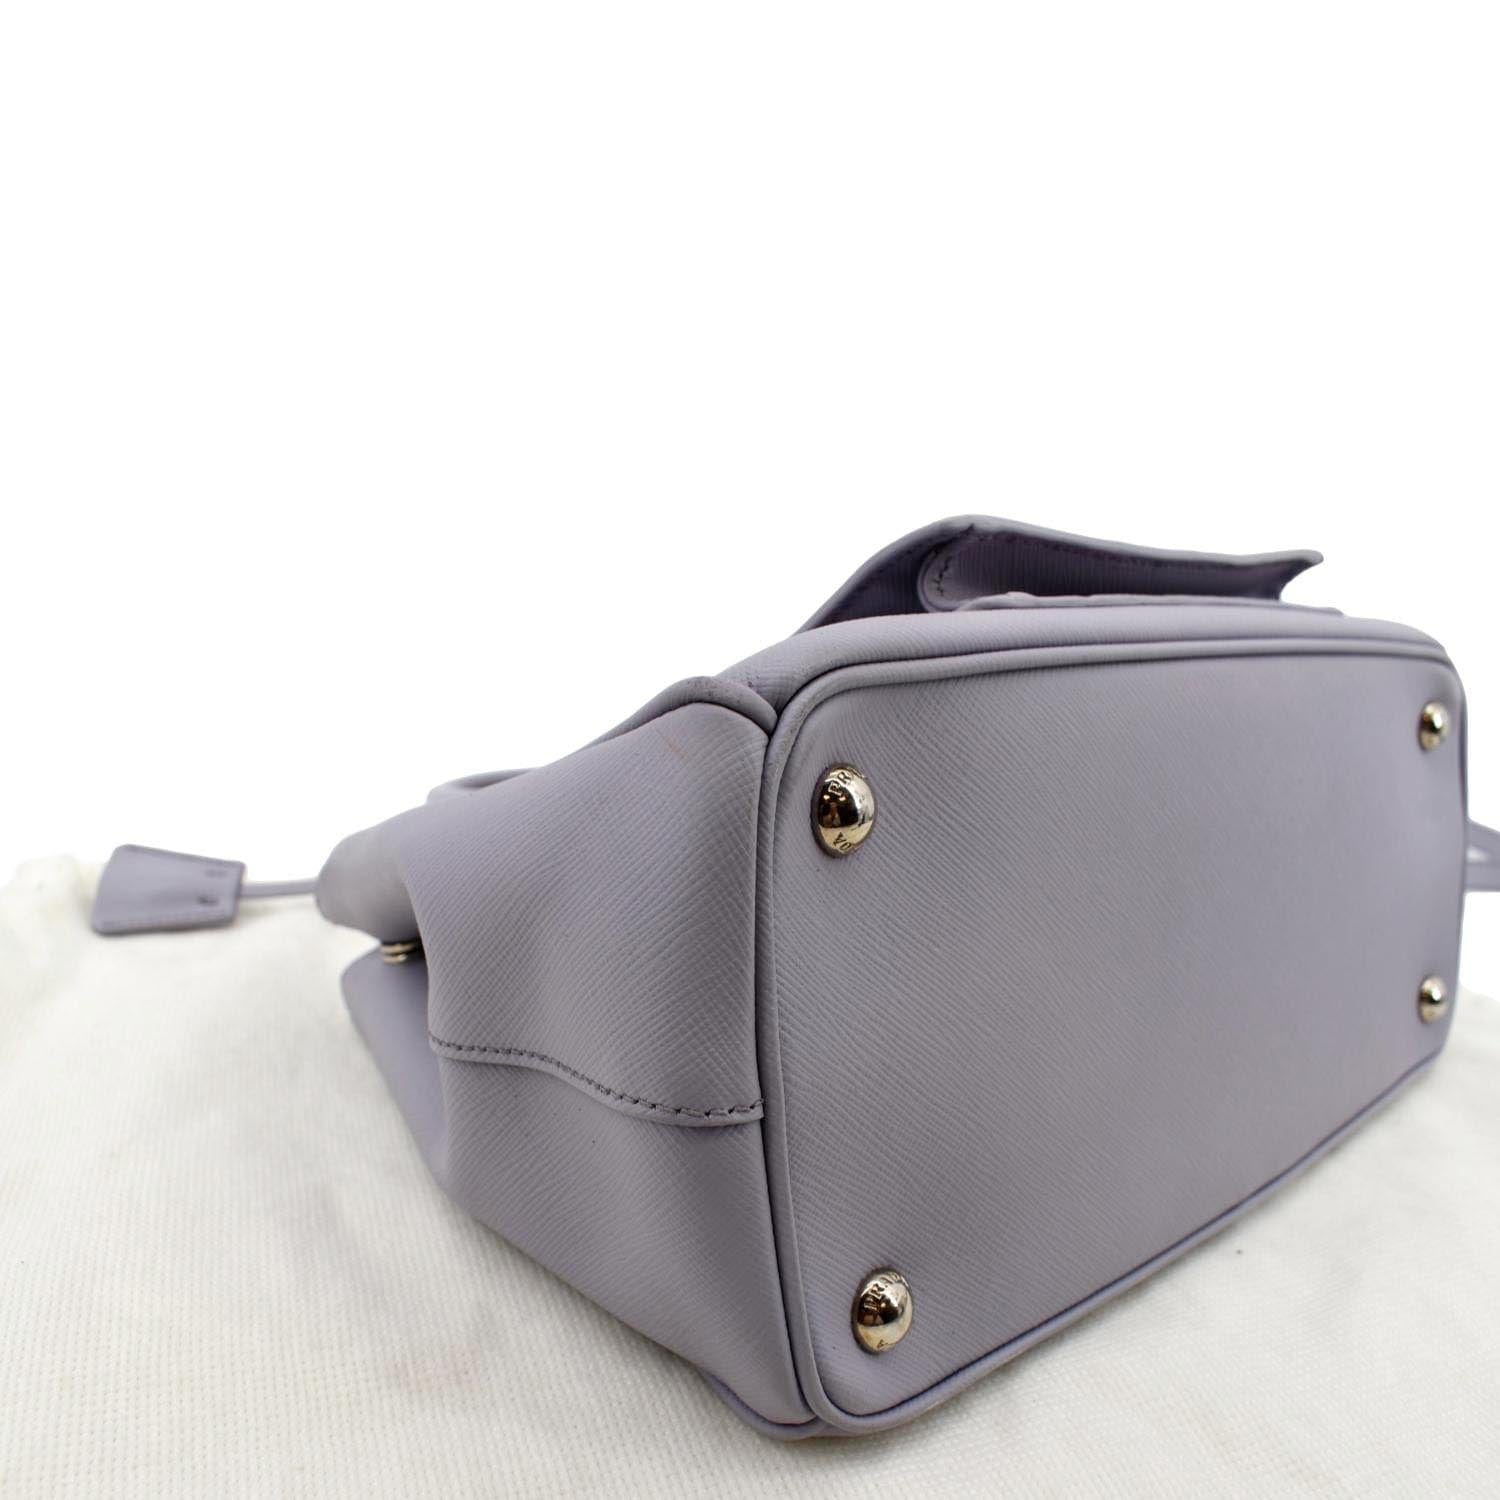 Prada Double Zip Saffiano Leather Tote Shoulder Bag